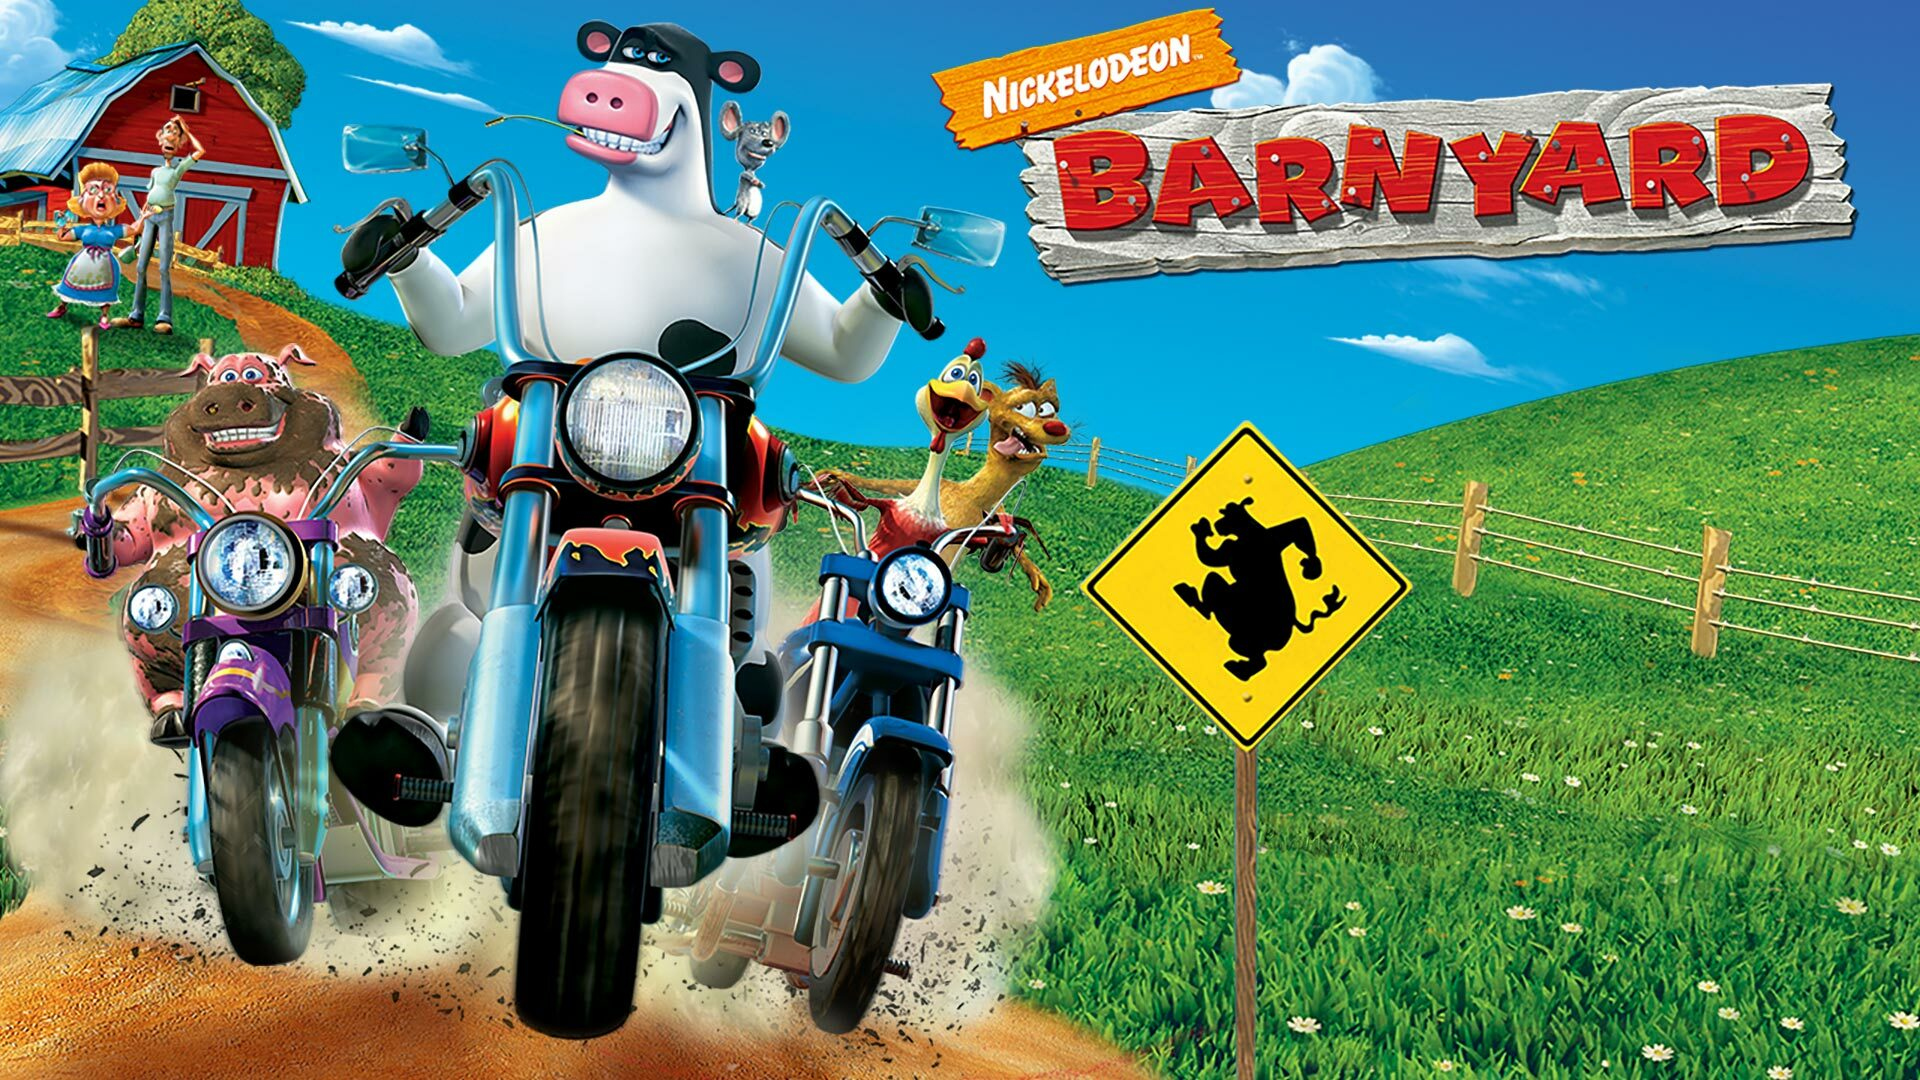 Barnyard - Watch Full Movie on Paramount Plus